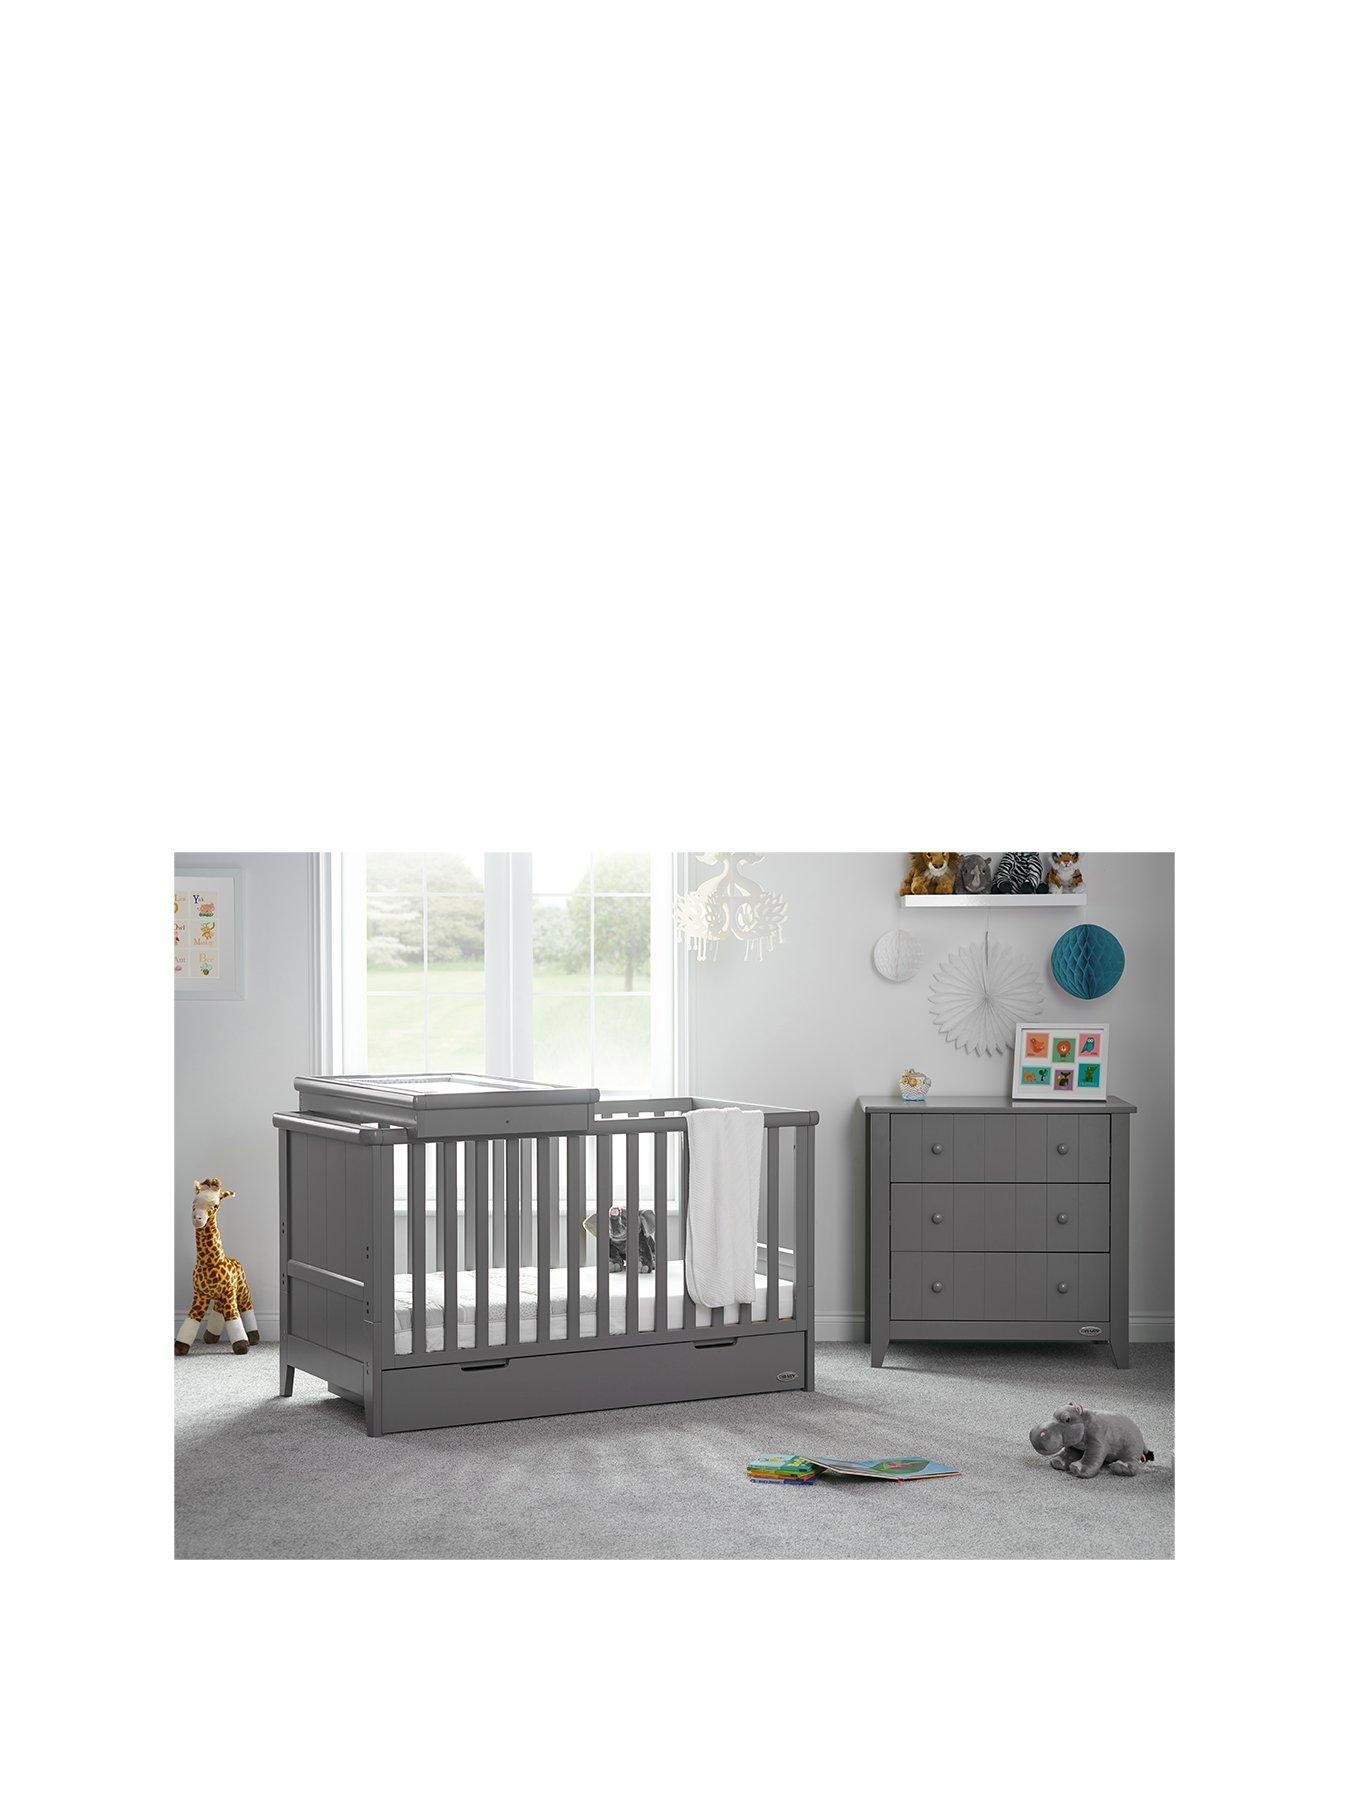 obaby nursery set